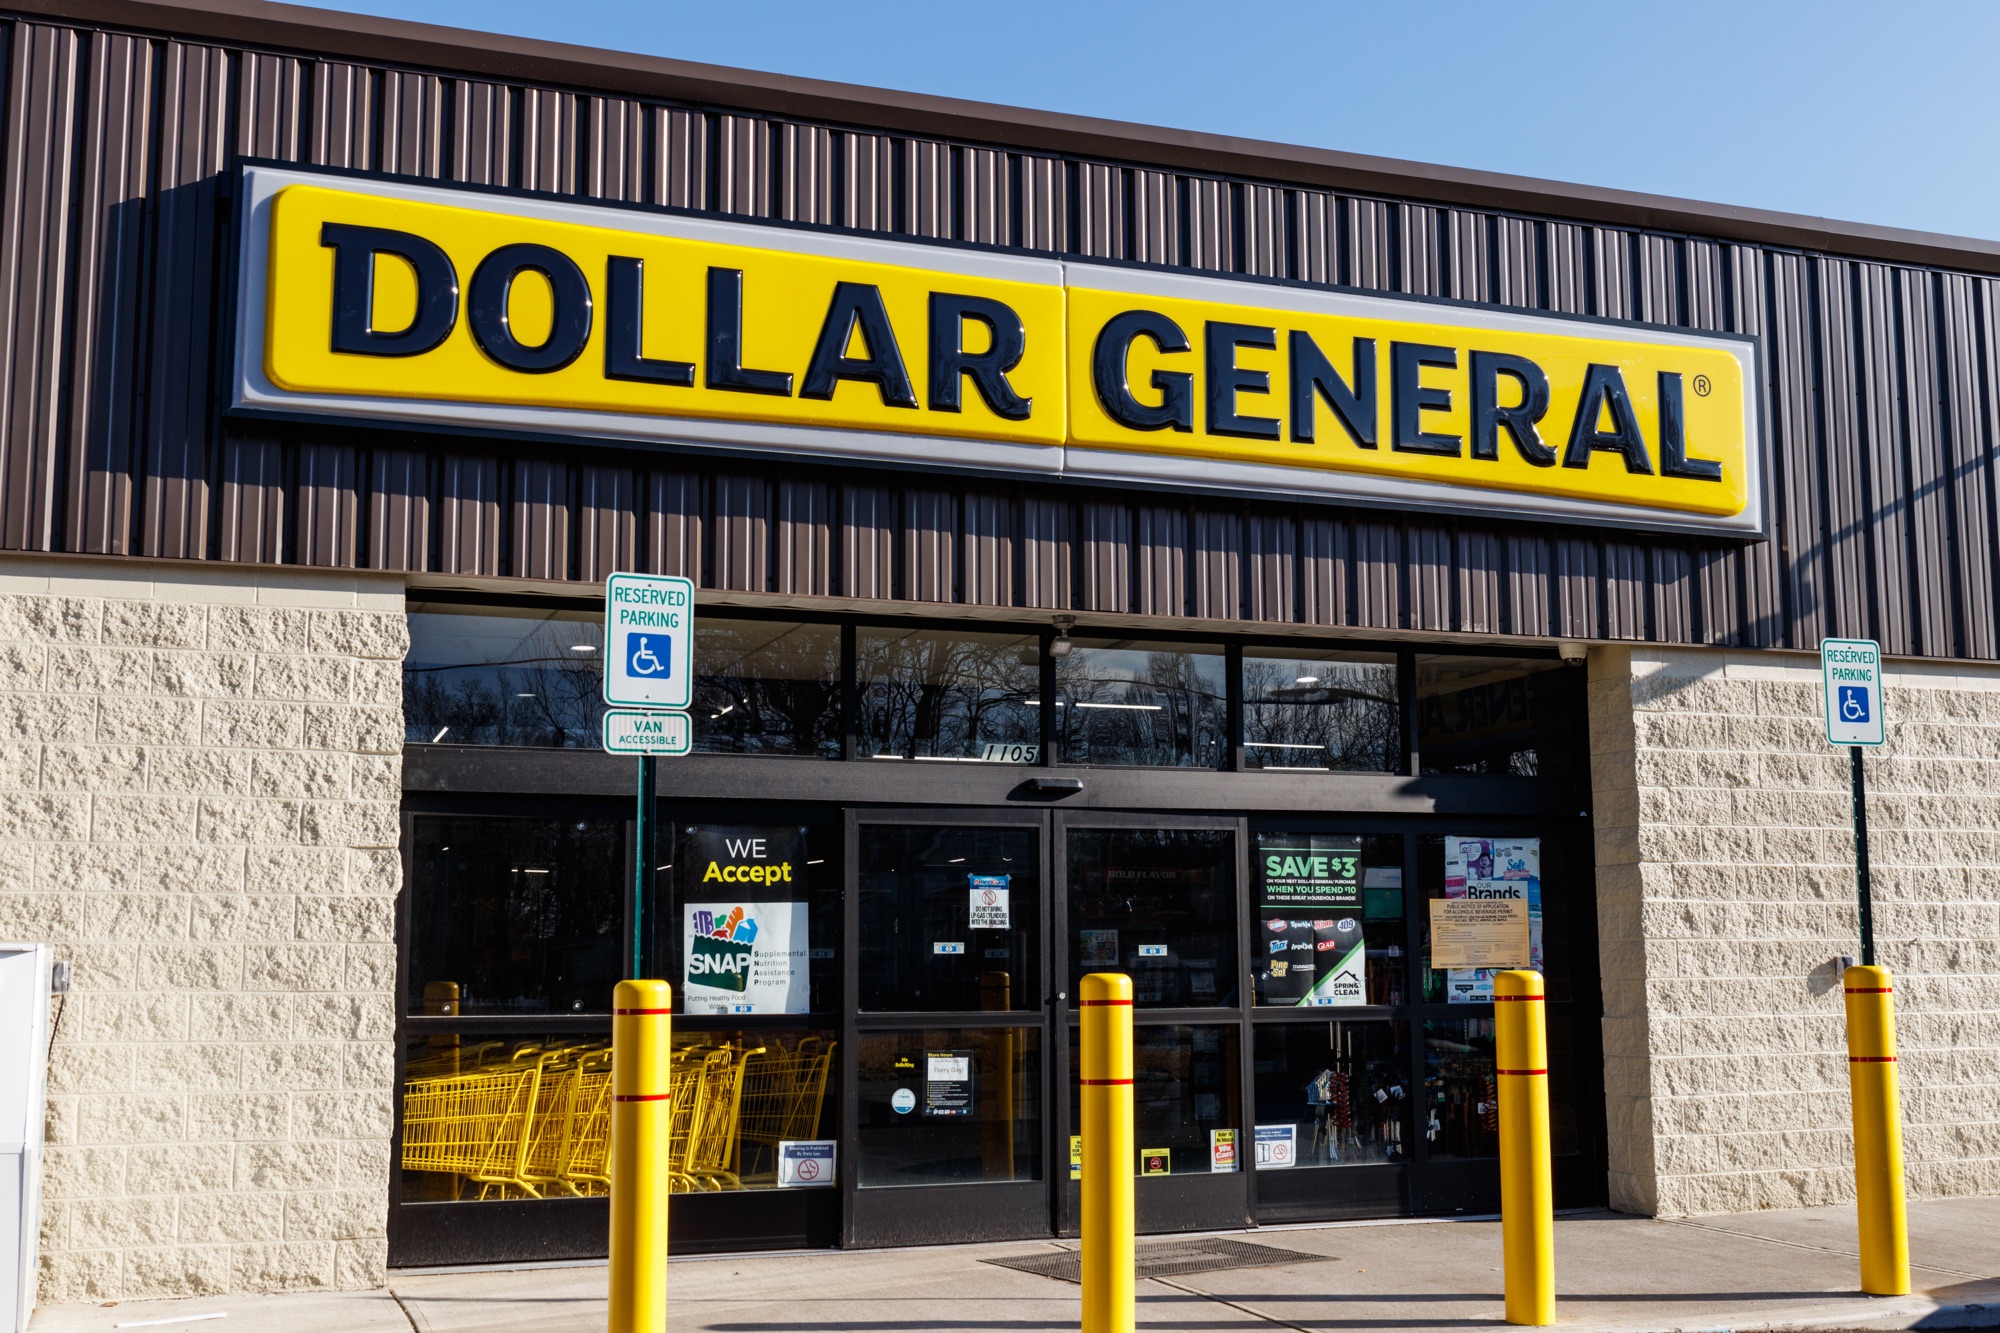 15 Fun Spring Finds at Dollar General